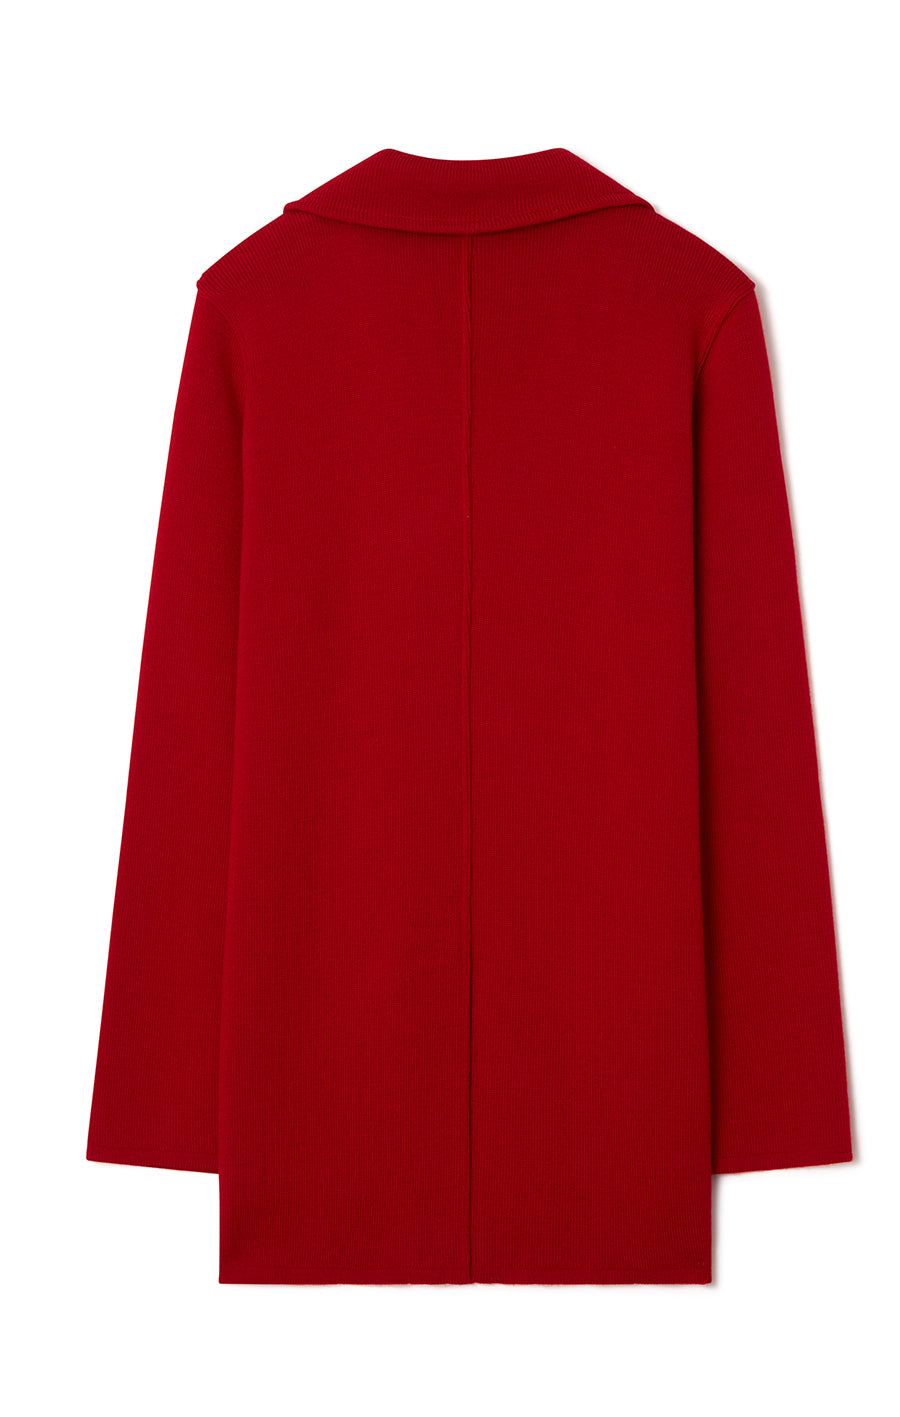 Victoria Jacket Red